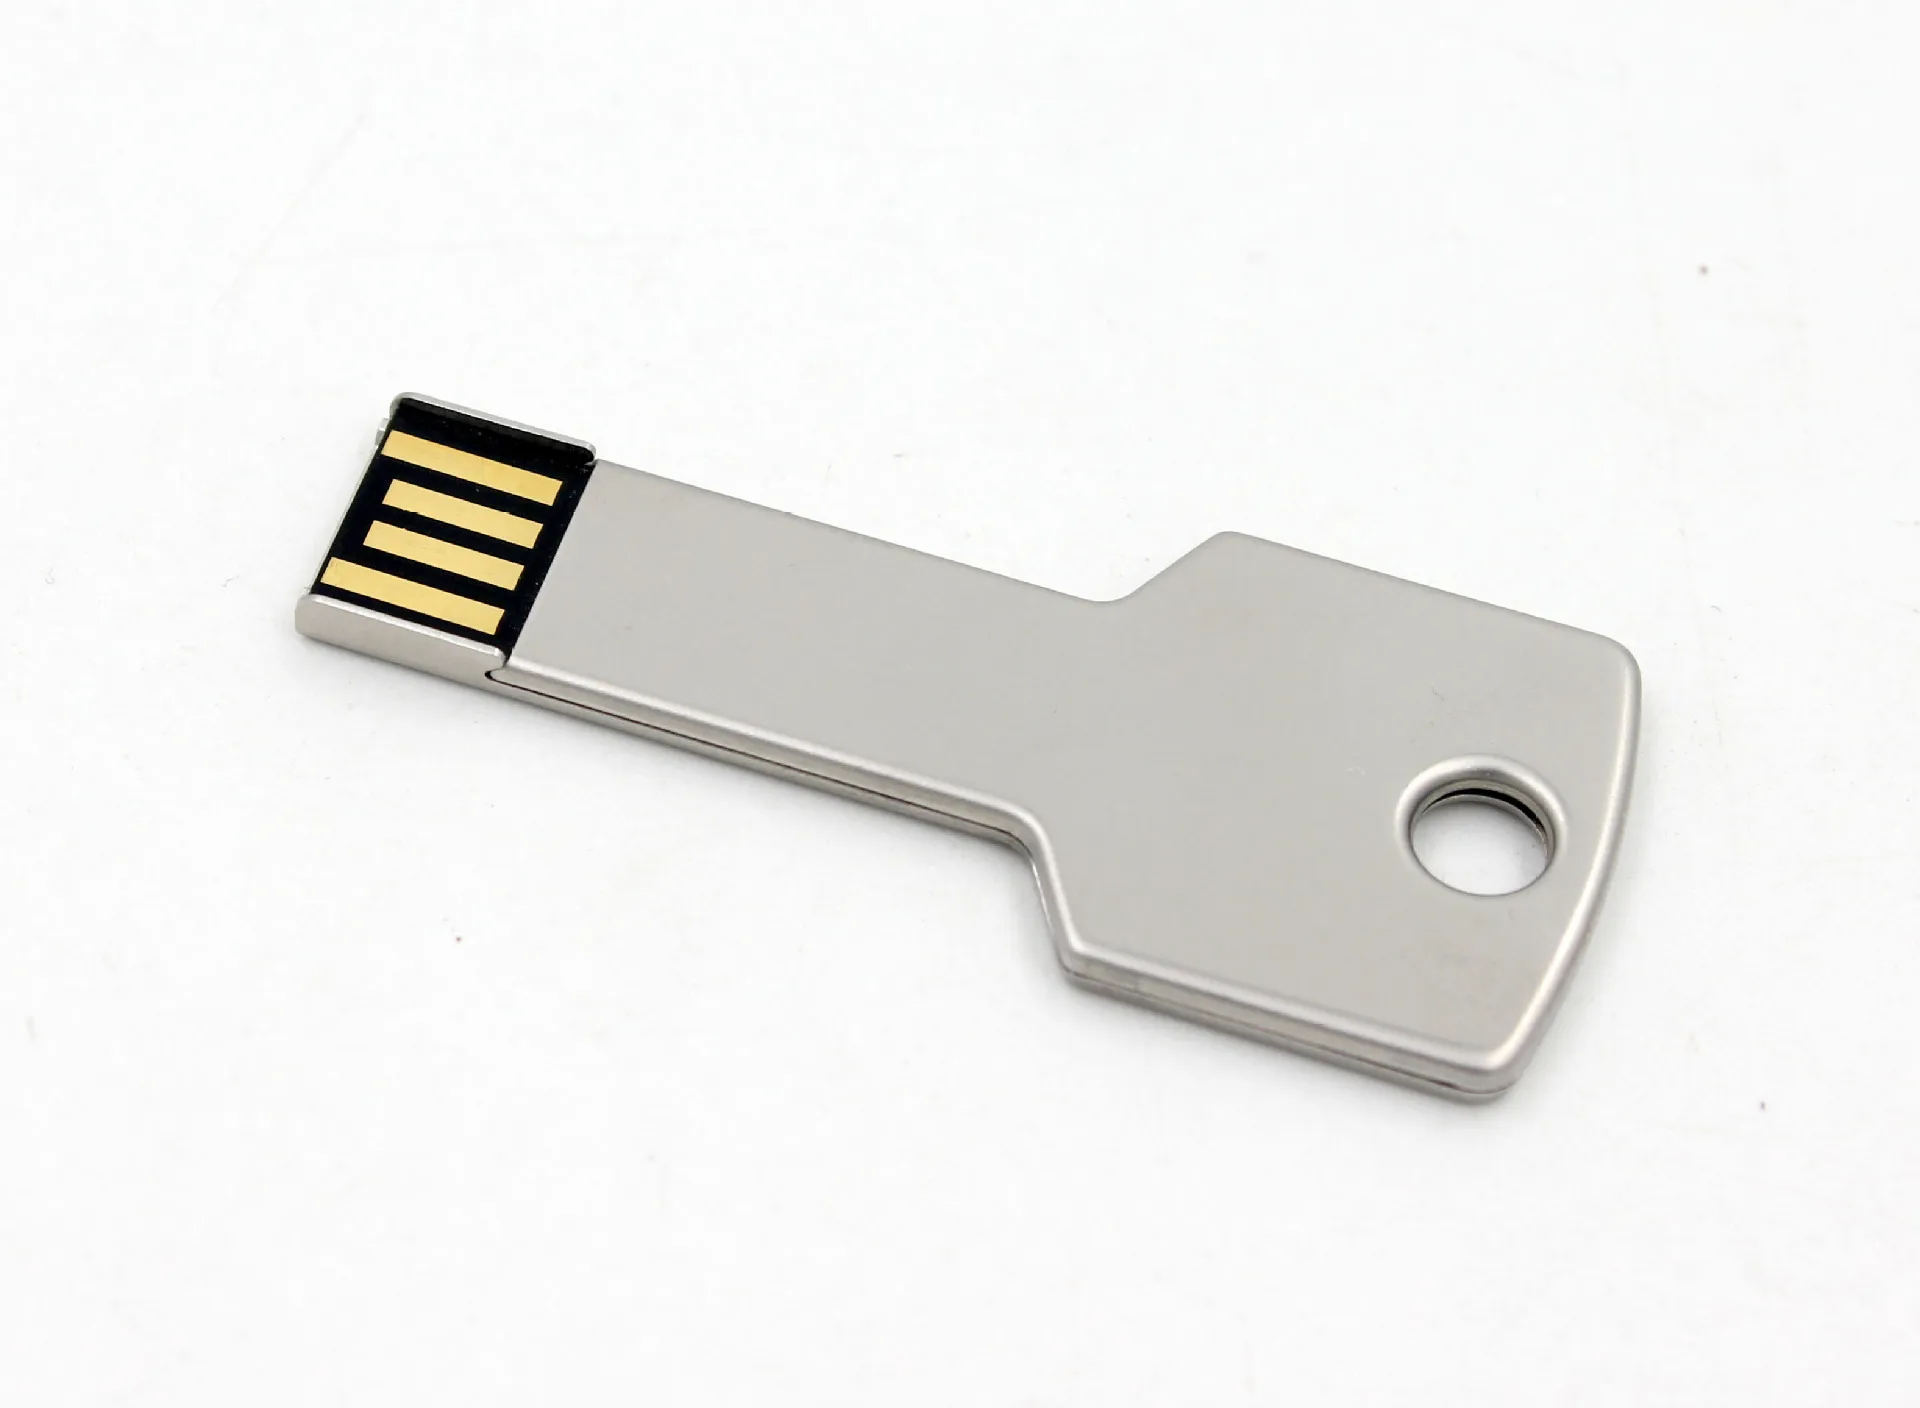 Colorful USB Key USB Flash Drive Key 8GB Promotional Key USB